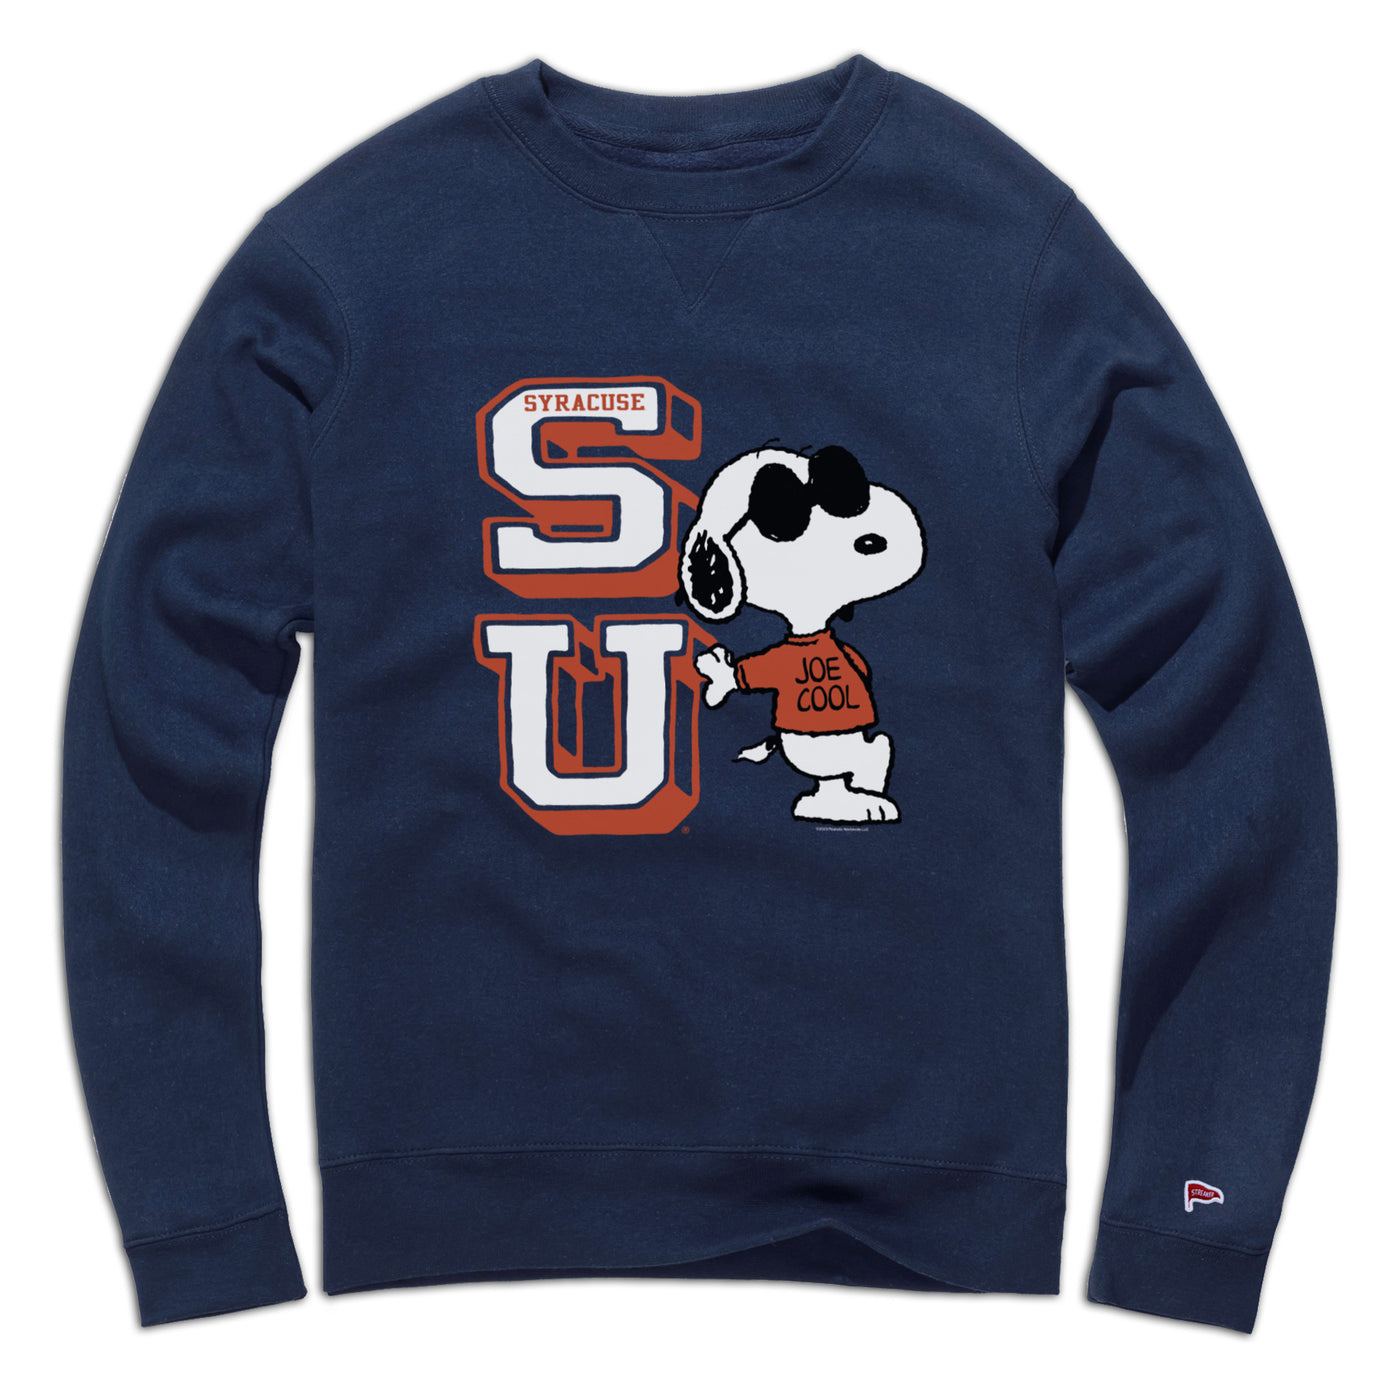 Peanuts x Syracuse Joe Cool Crewneck Sweatshirt - Streaker Sports